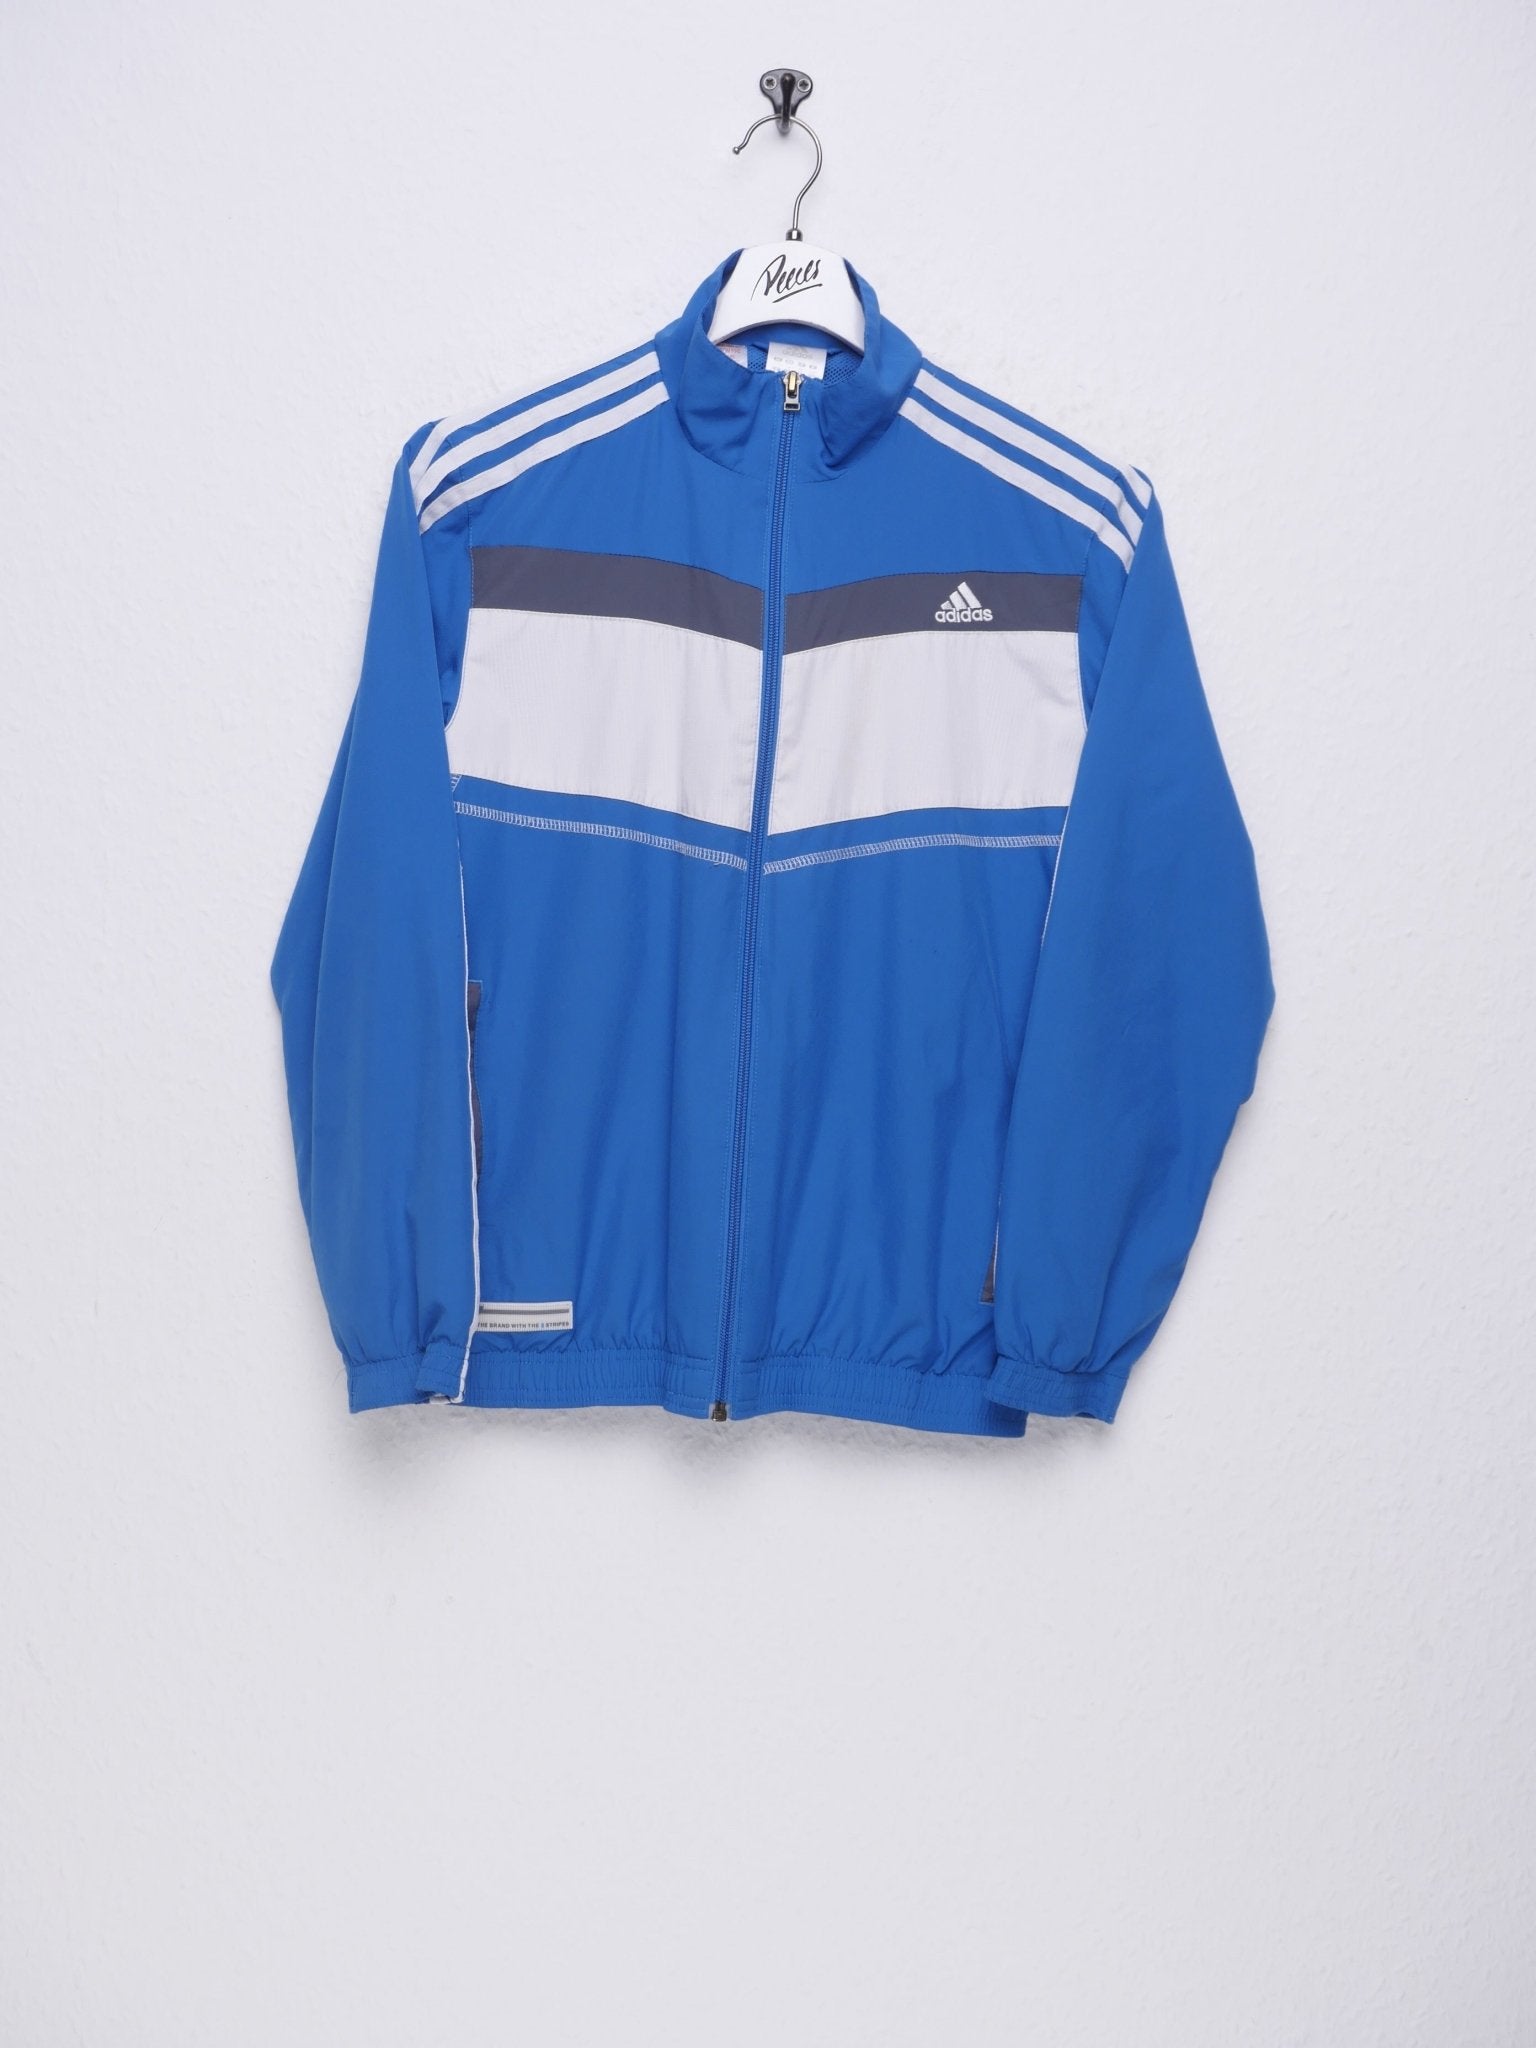 Adidas embroidered Logo blue Track Jacke - Peeces